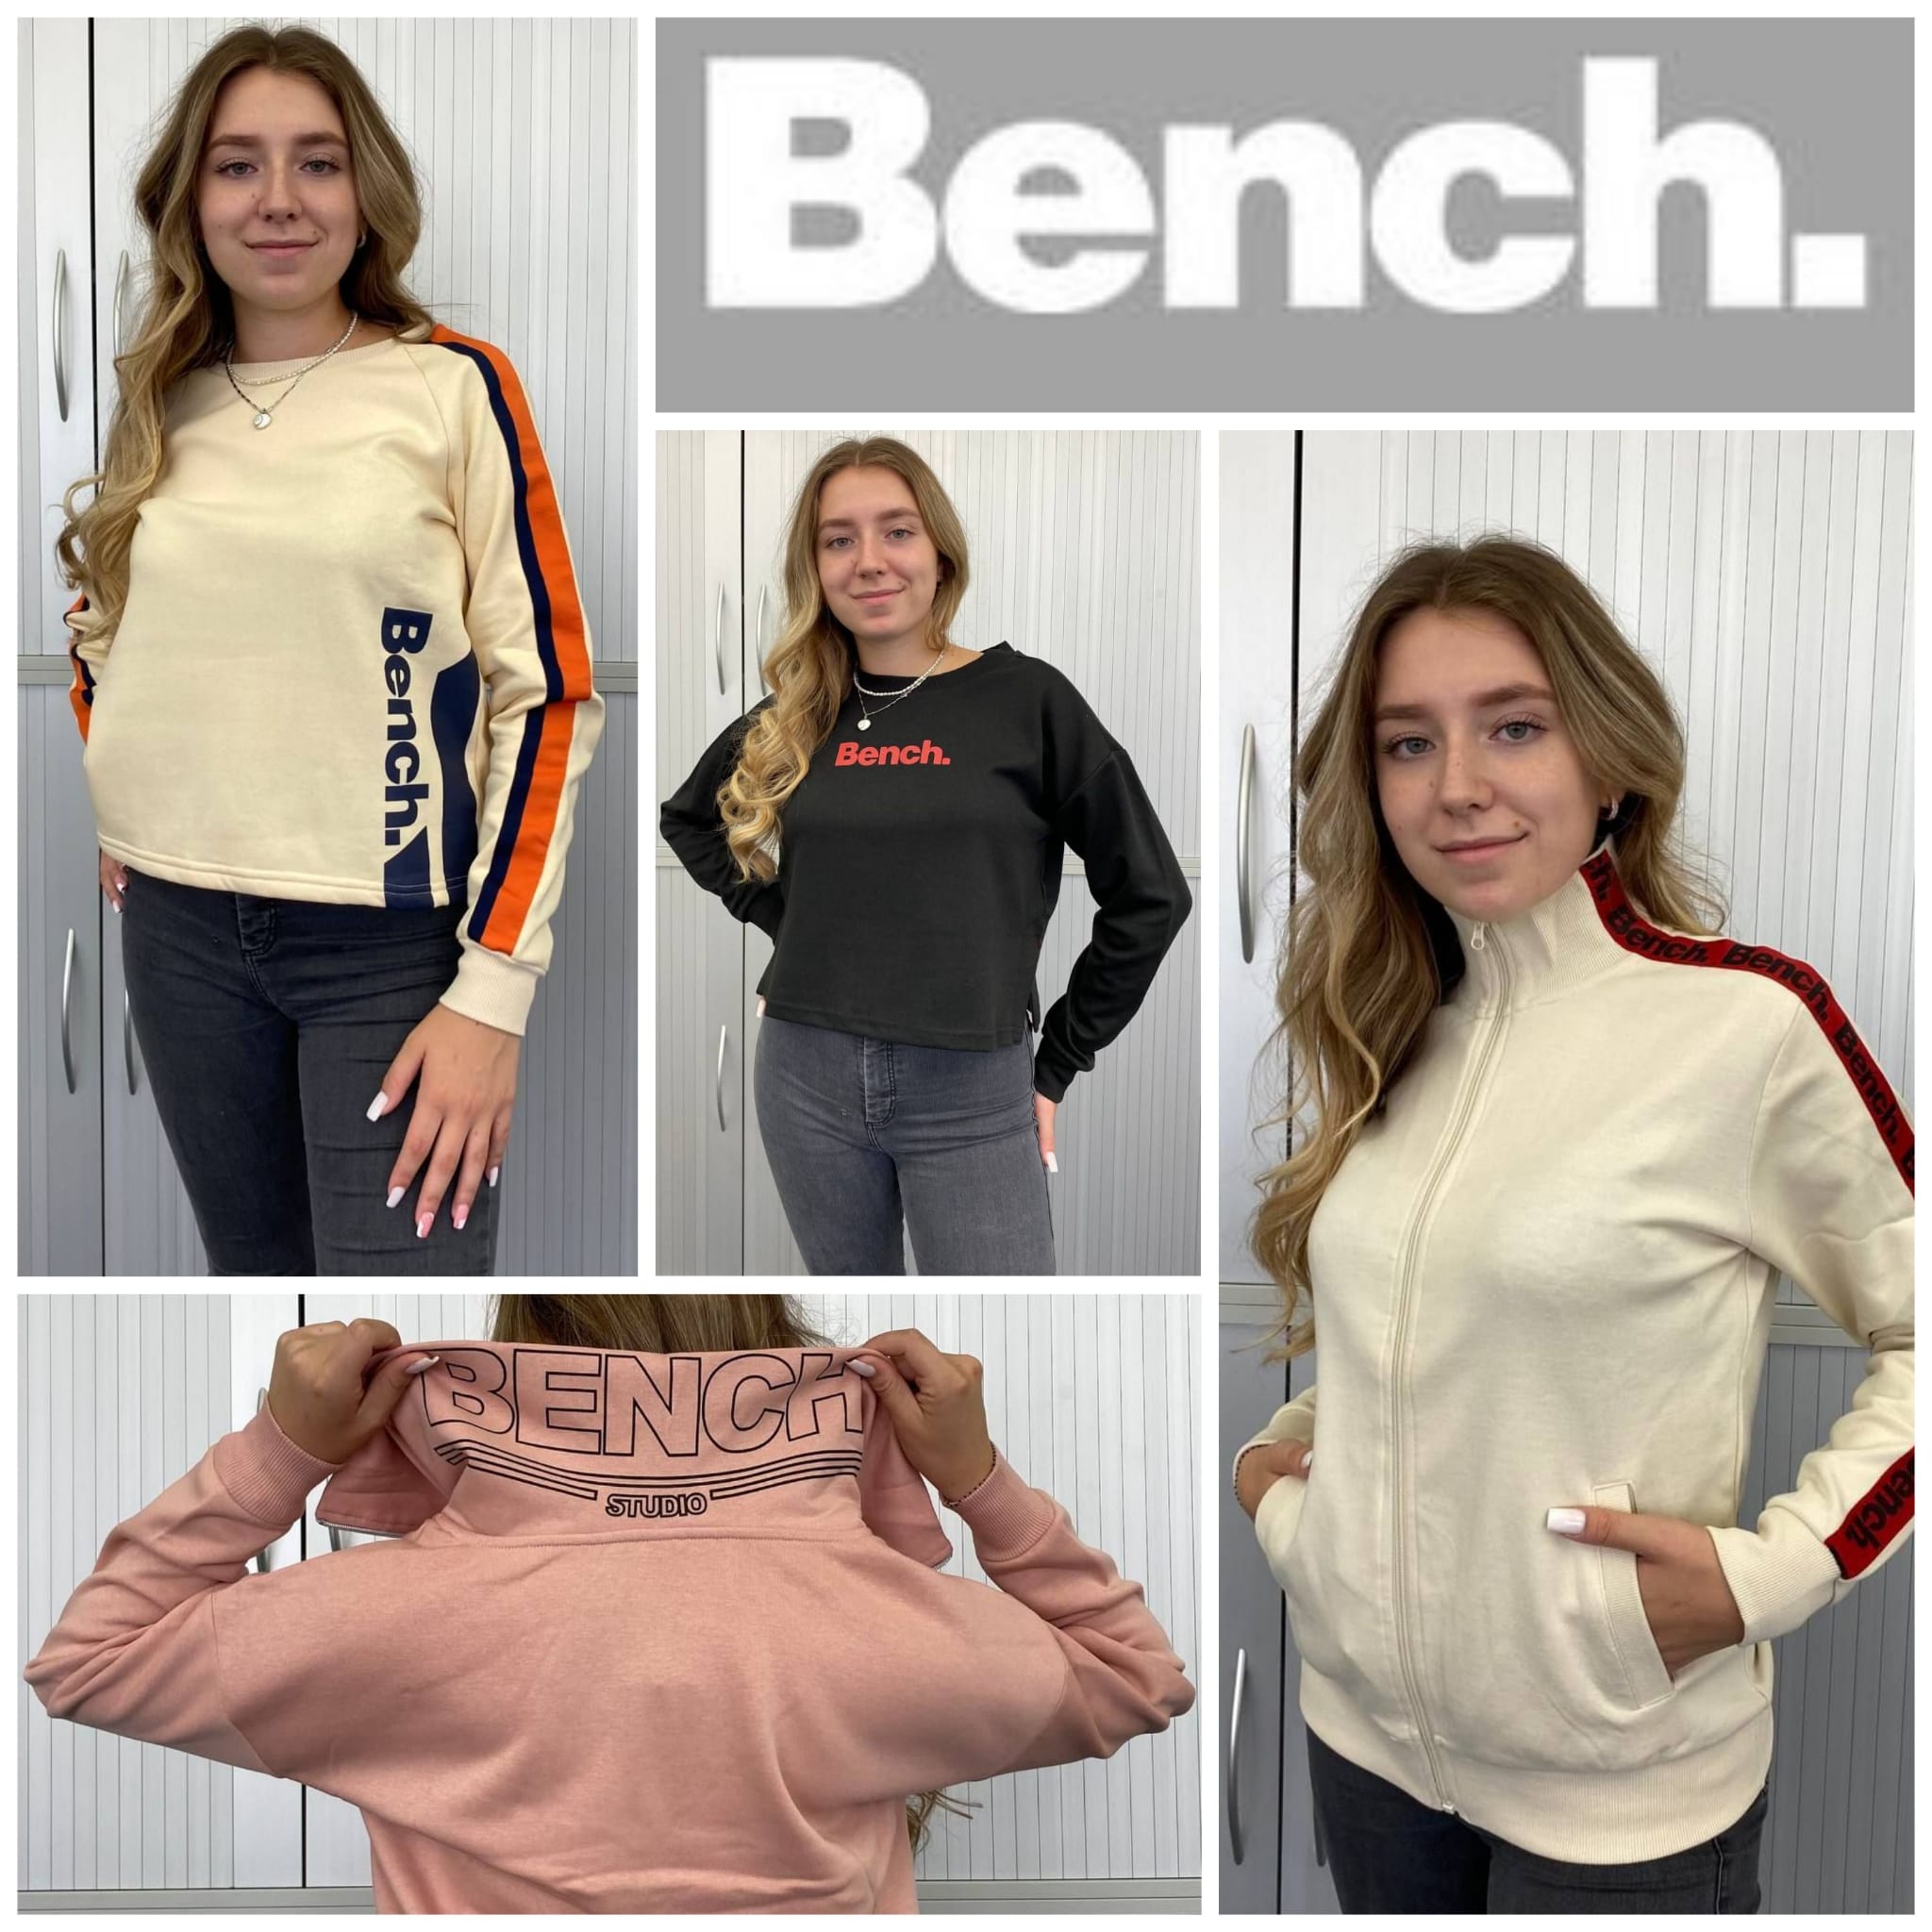  Women's sweatshirts from Bench 